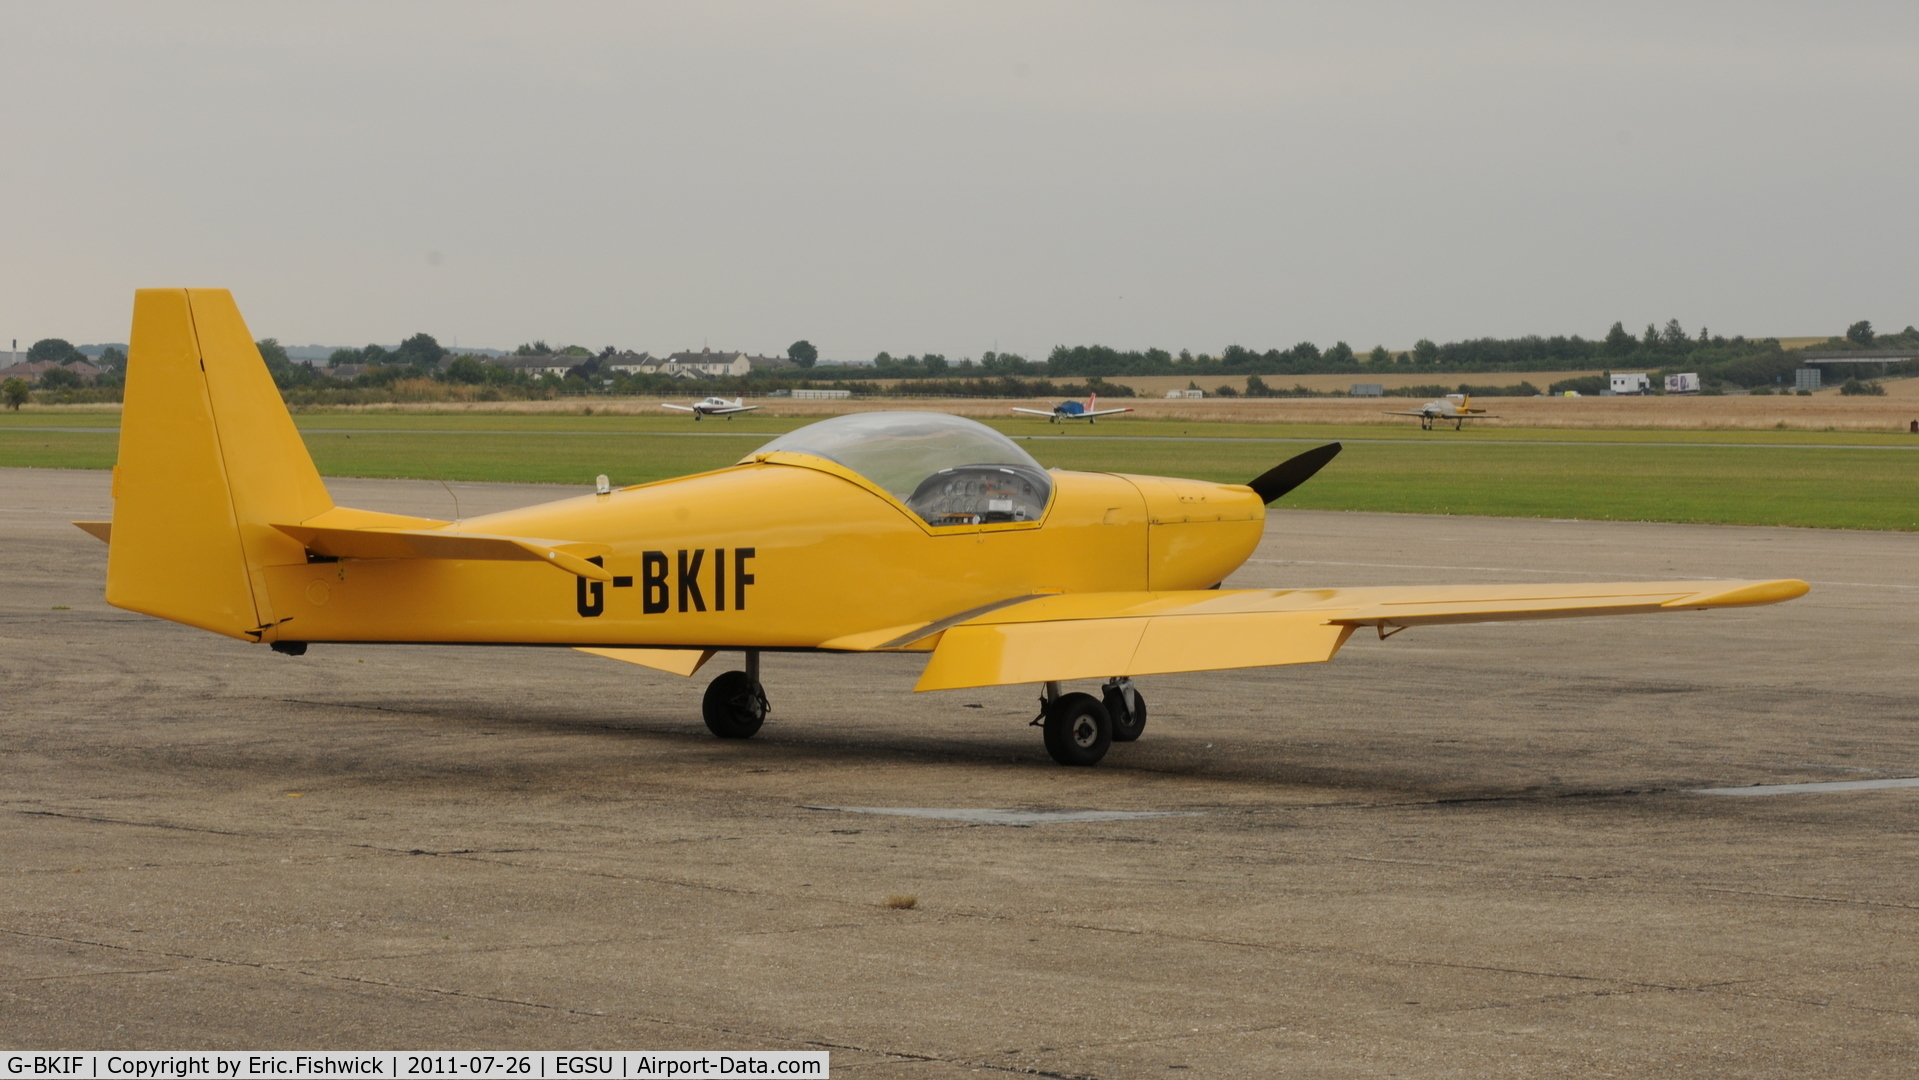 G-BKIF, 1976 Fournier RF-6B-100 C/N 3, G-BKIF at Duxford